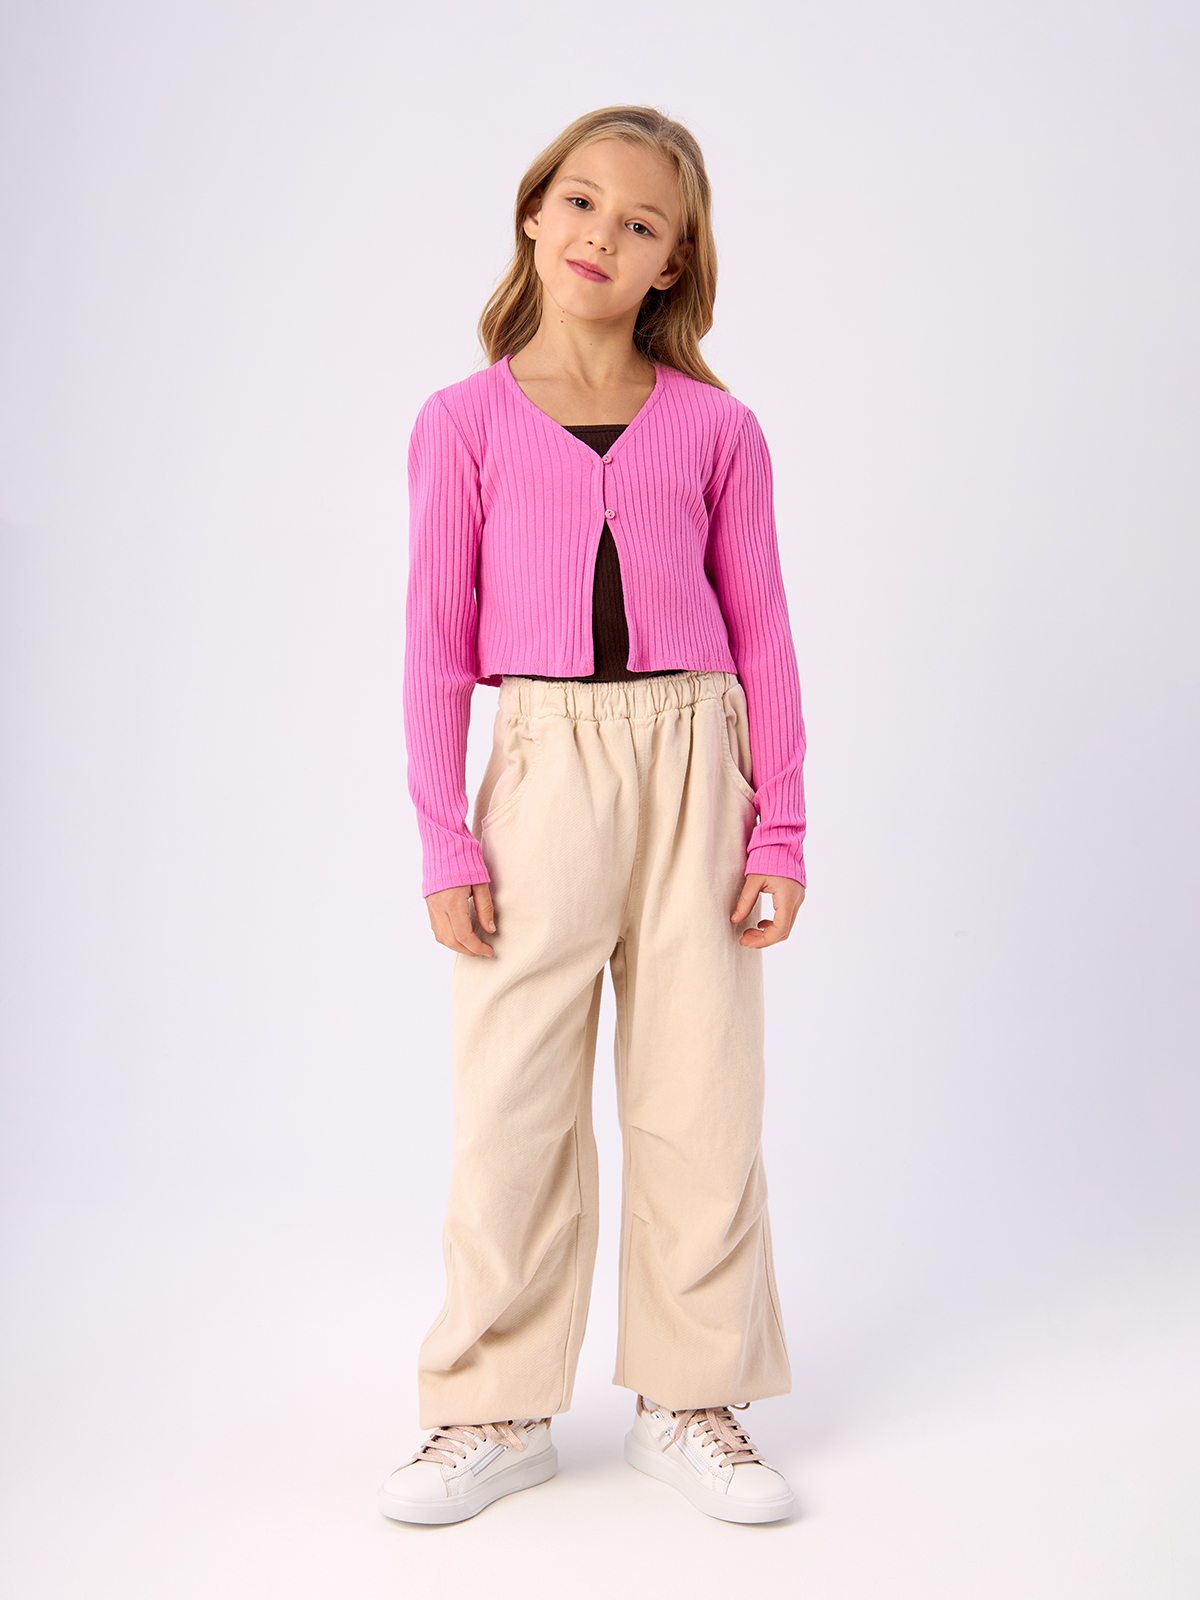 Кардиган H&M для девочек, розовый-001, размер 146/152, 1120731001 розовый кардиган gulliver 98